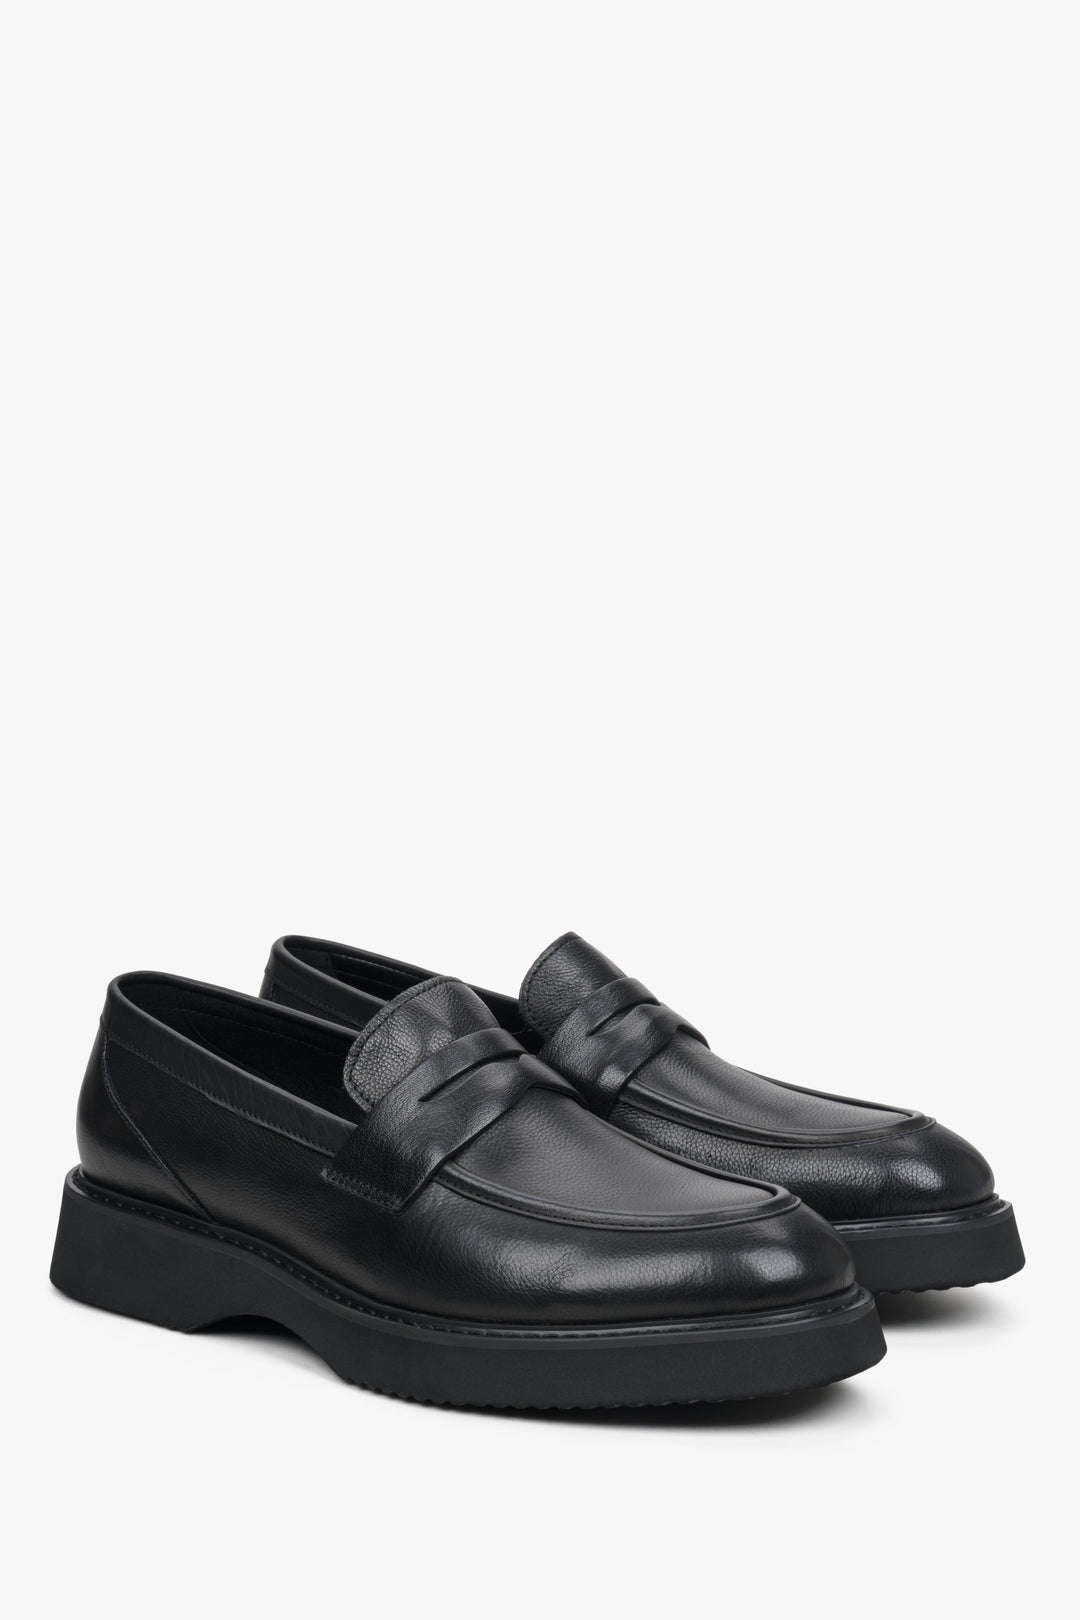 Men's black leather Estro loafers.